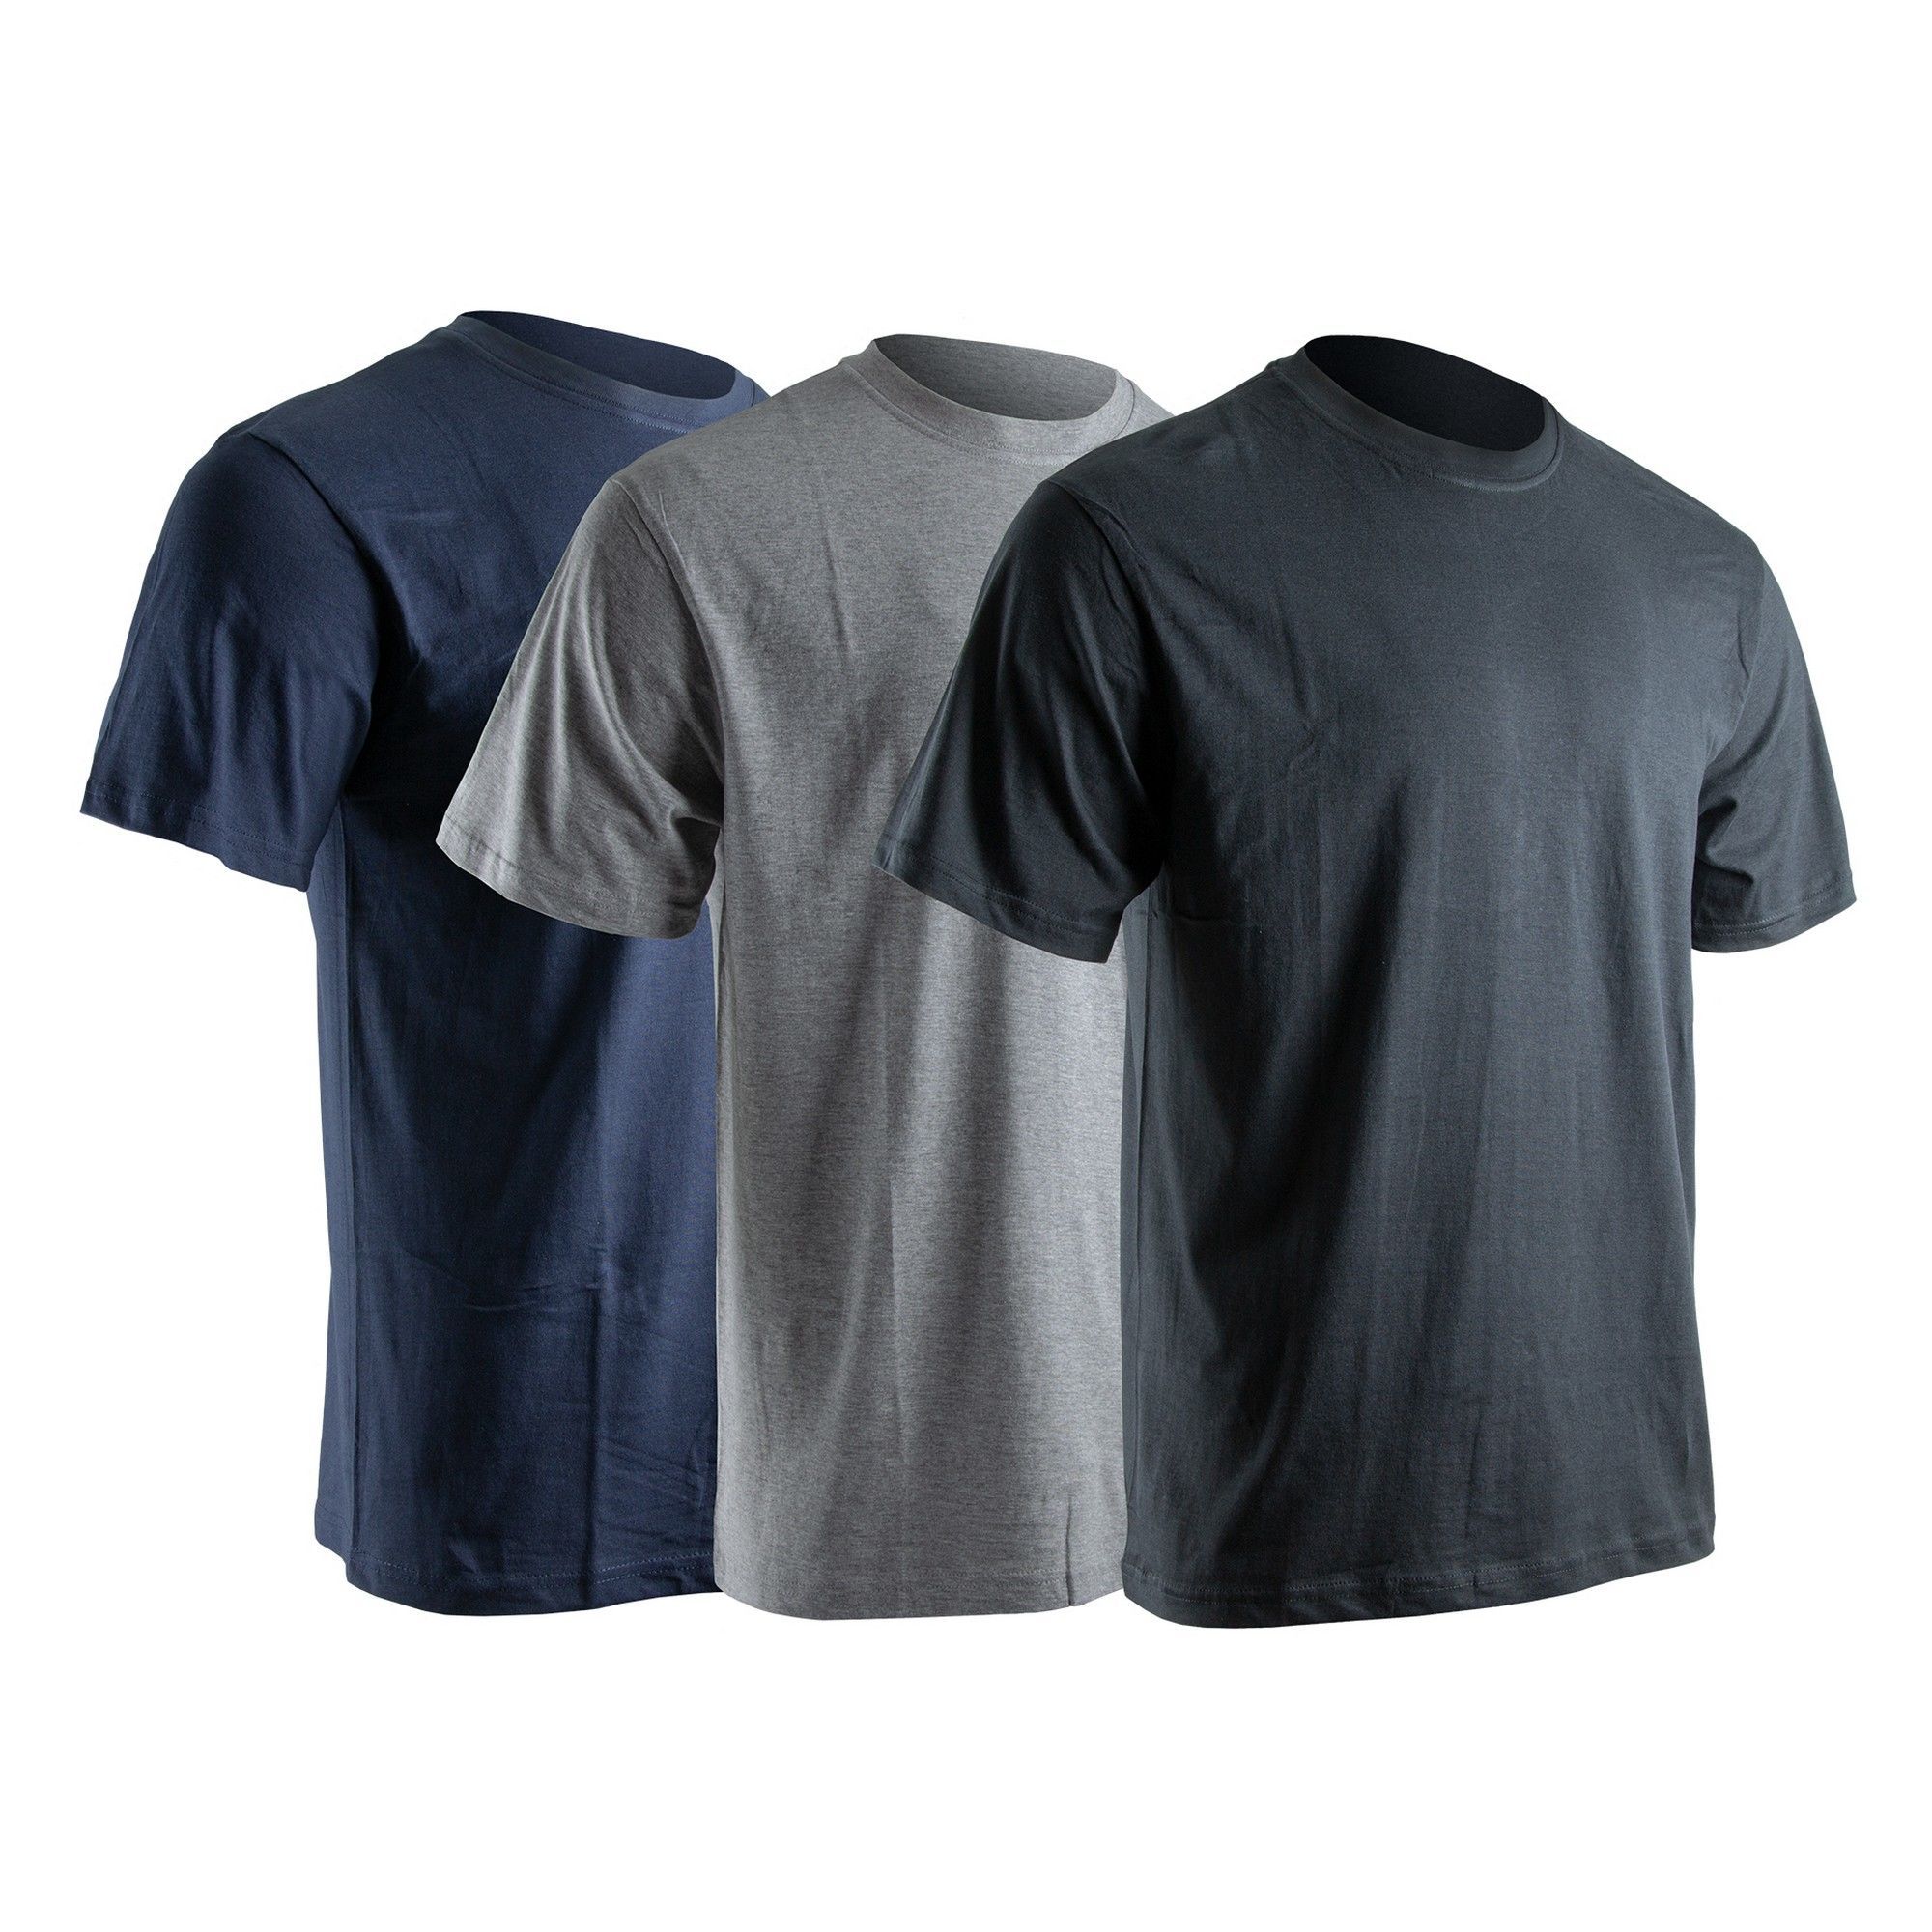 3 T-Shirt Set - Short Sleeves - Round Collar - Size 3/Medium - Black/Mixed  Grey/Navy from HUGO STRONG